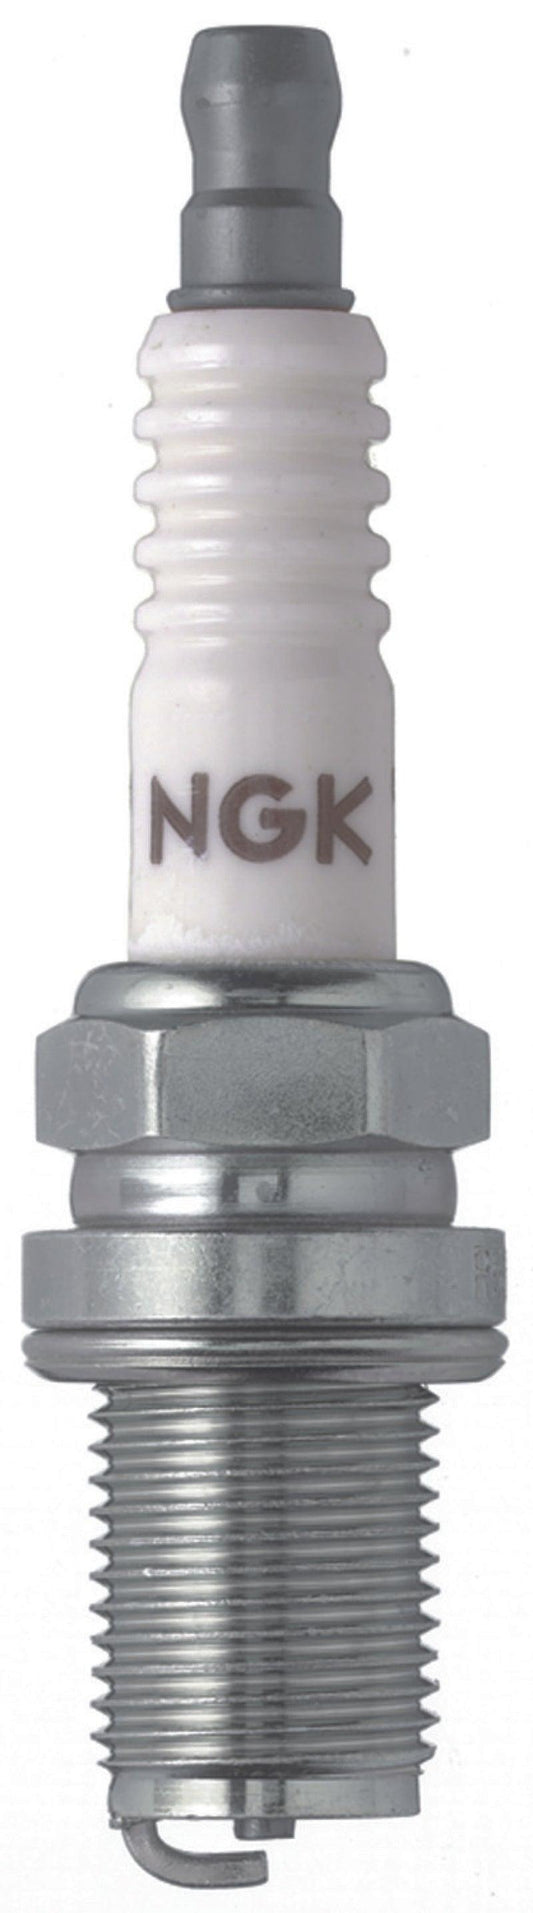 NGK Nickel Spark Plug Box of 4 (R5671A-10) - Torque Motorsport